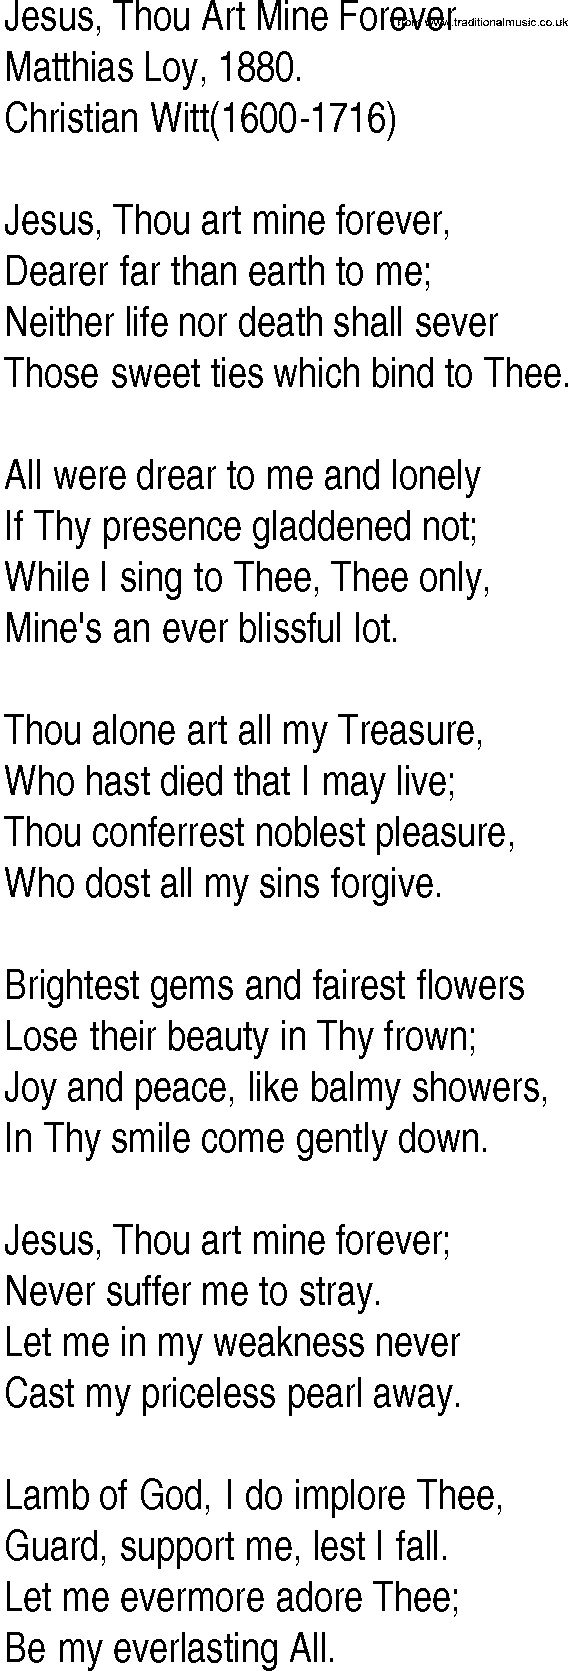 Hymn and Gospel Song: Jesus, Thou Art Mine Forever by Matthias Loy lyrics